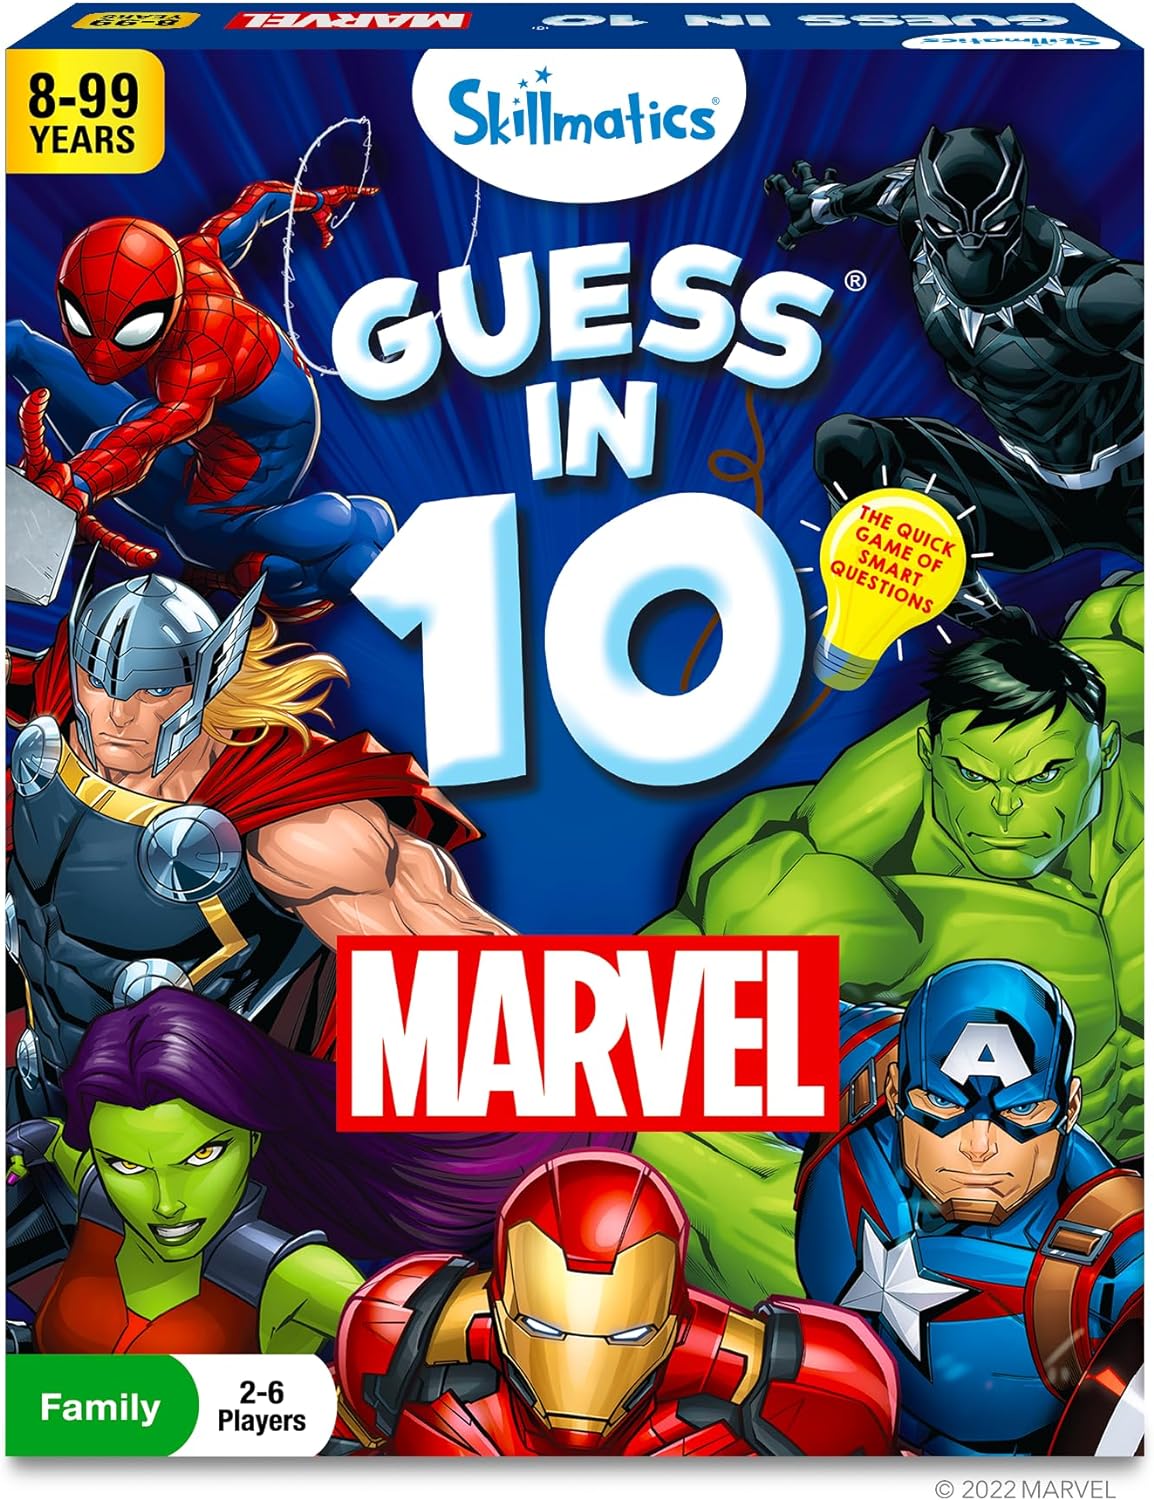 Skillmatics Guess in 10 Marvel Edition